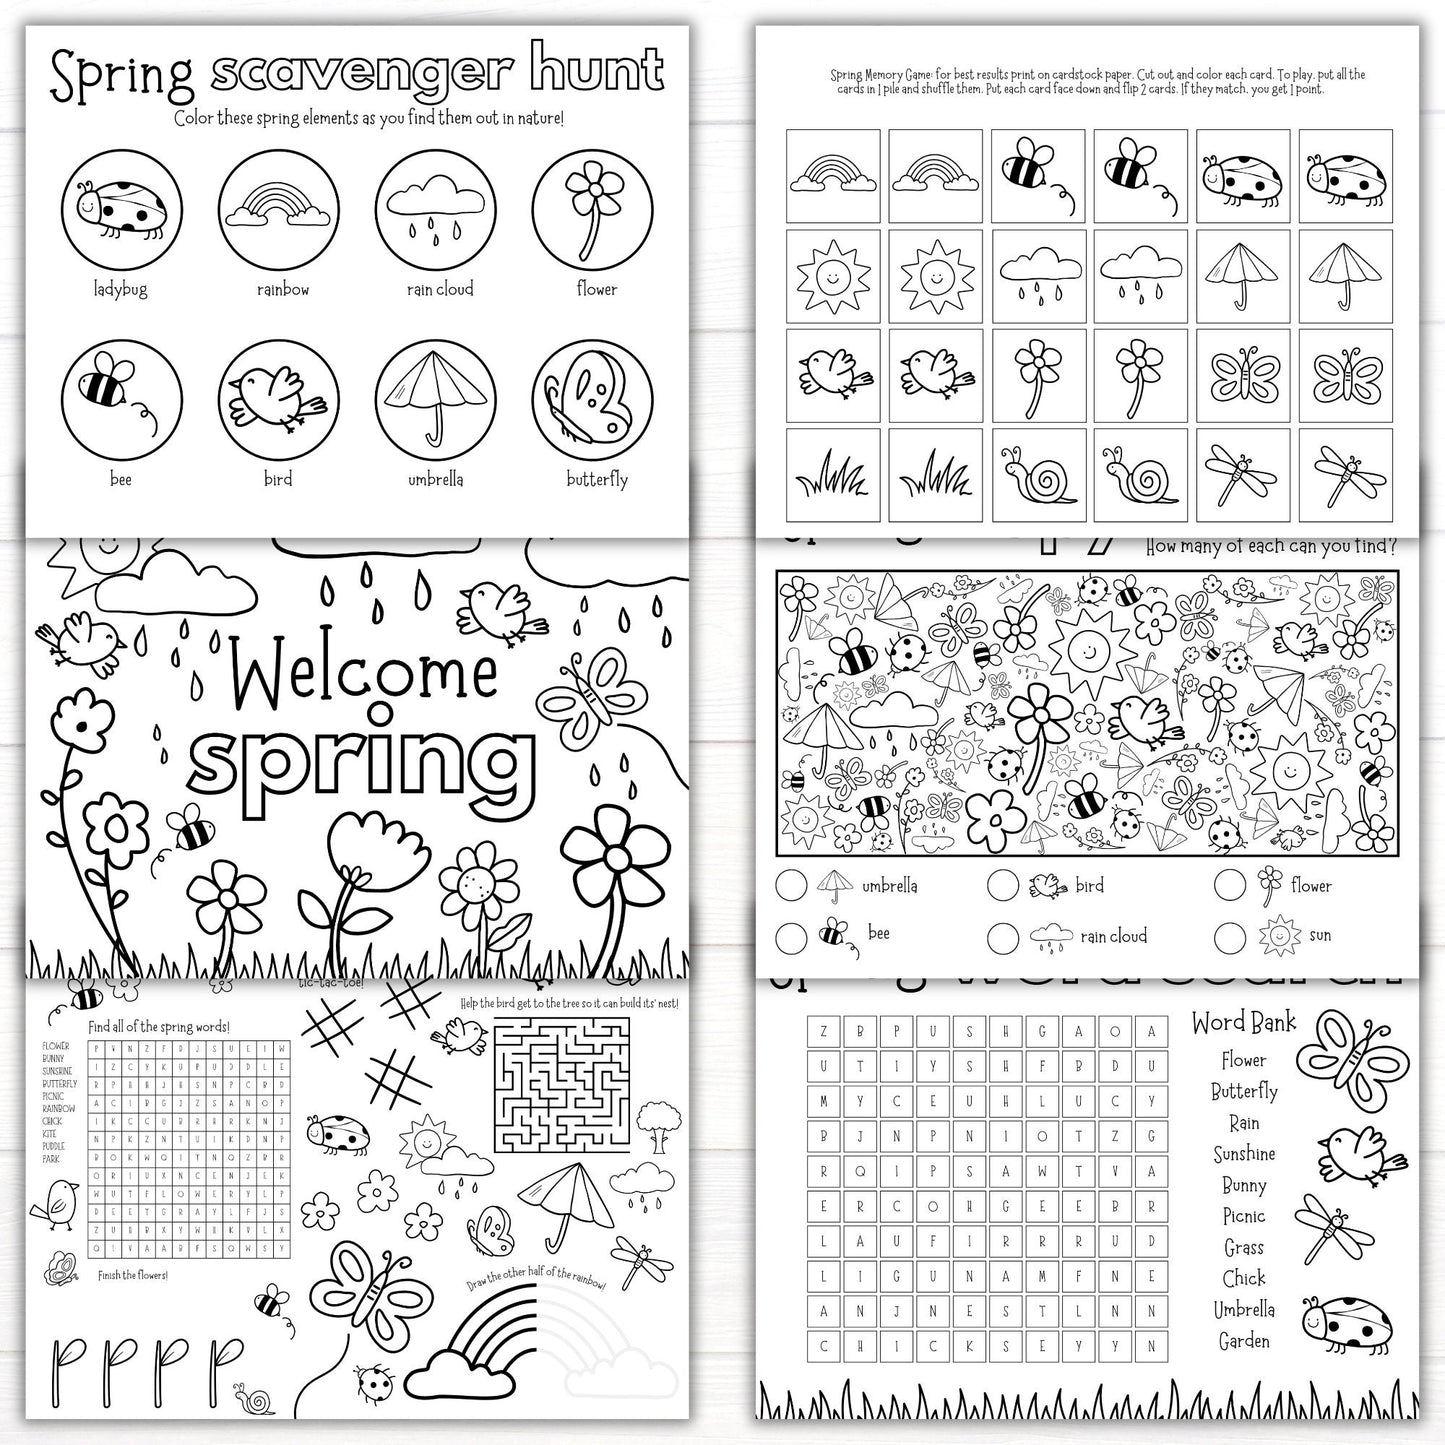 Spring Placemat Activity Pack, Printable Spring Activities for Kids, Printable Spring Worksheets, Spring Printables, Spring Bundle